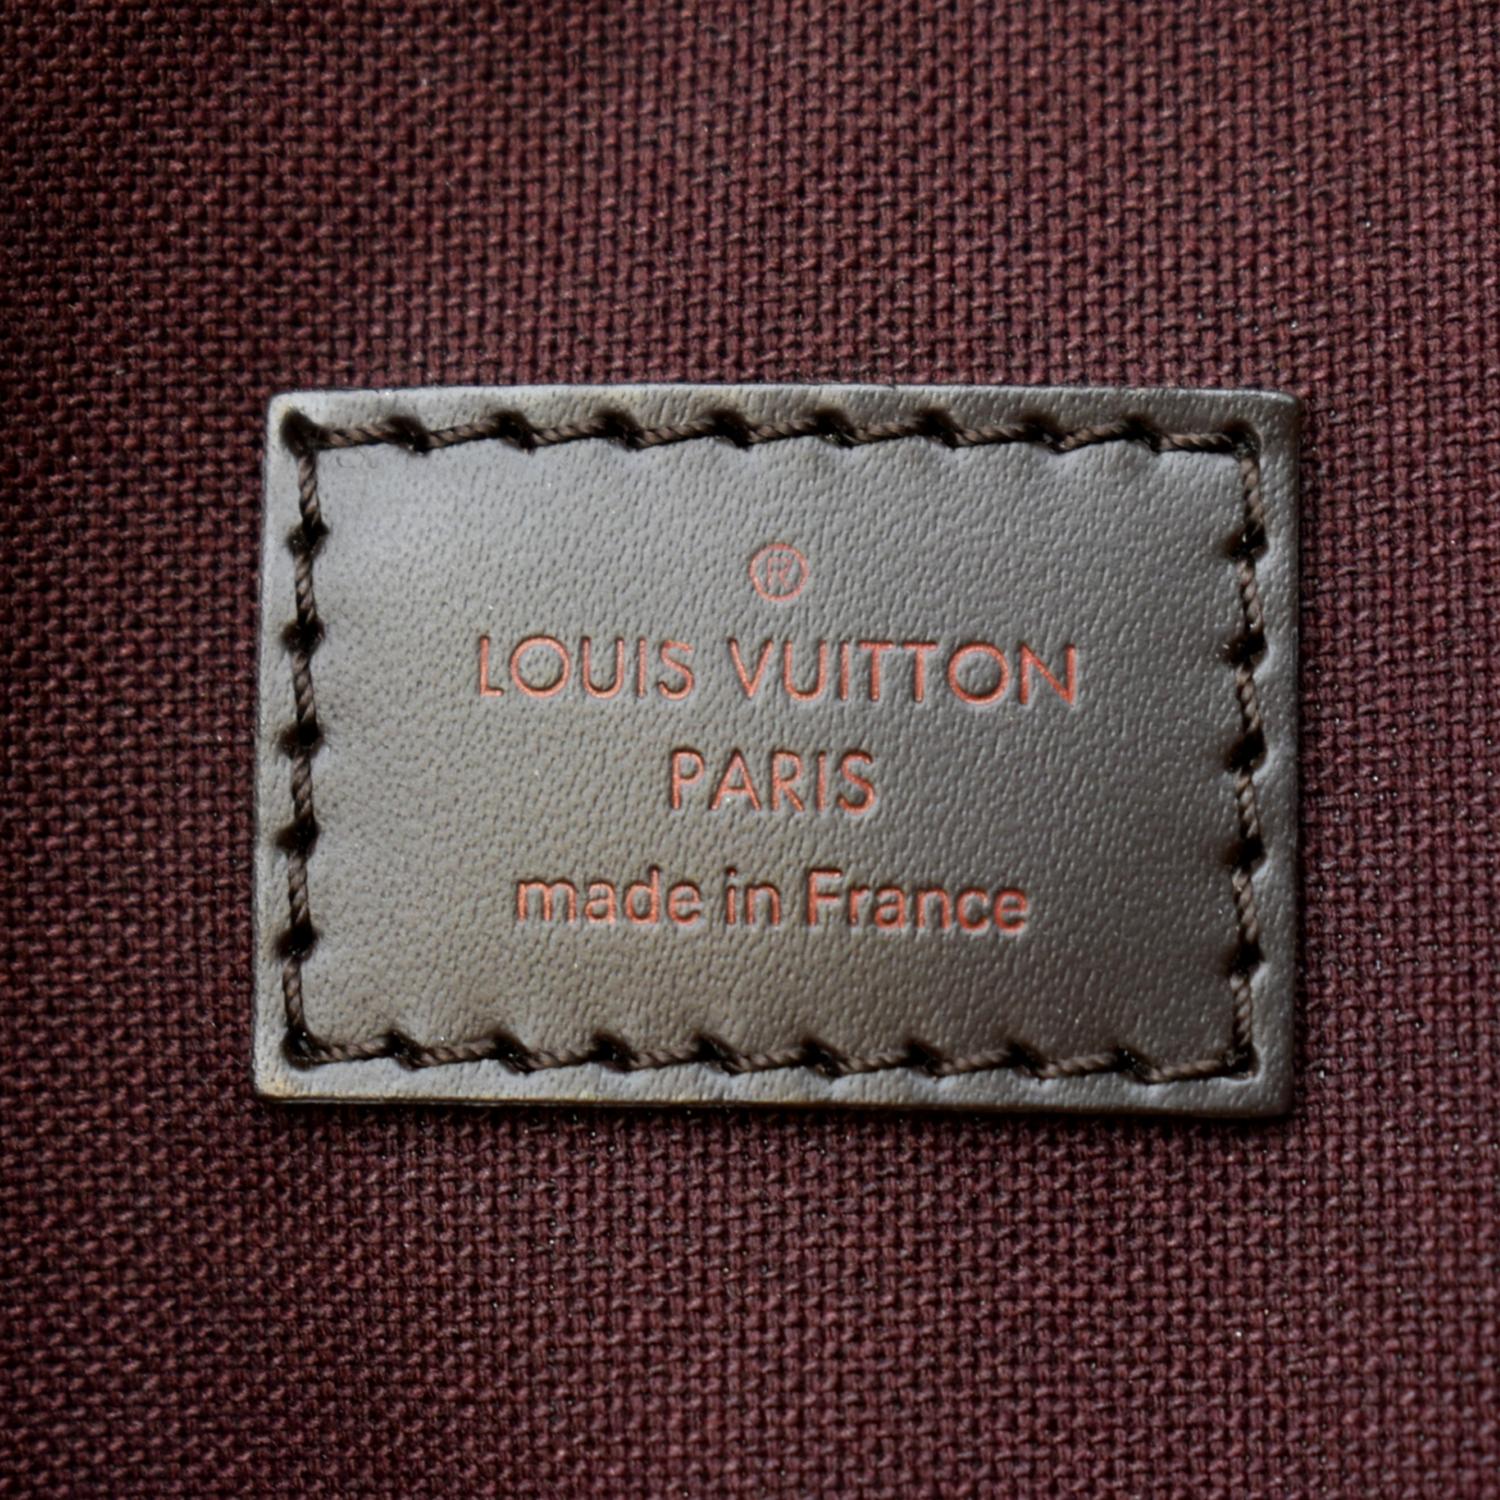 Sold at Auction: Louis Vuitton, Louis Vuitton - Excellent - Hoxton PM in  Damier Ebene - Brown Crossbody